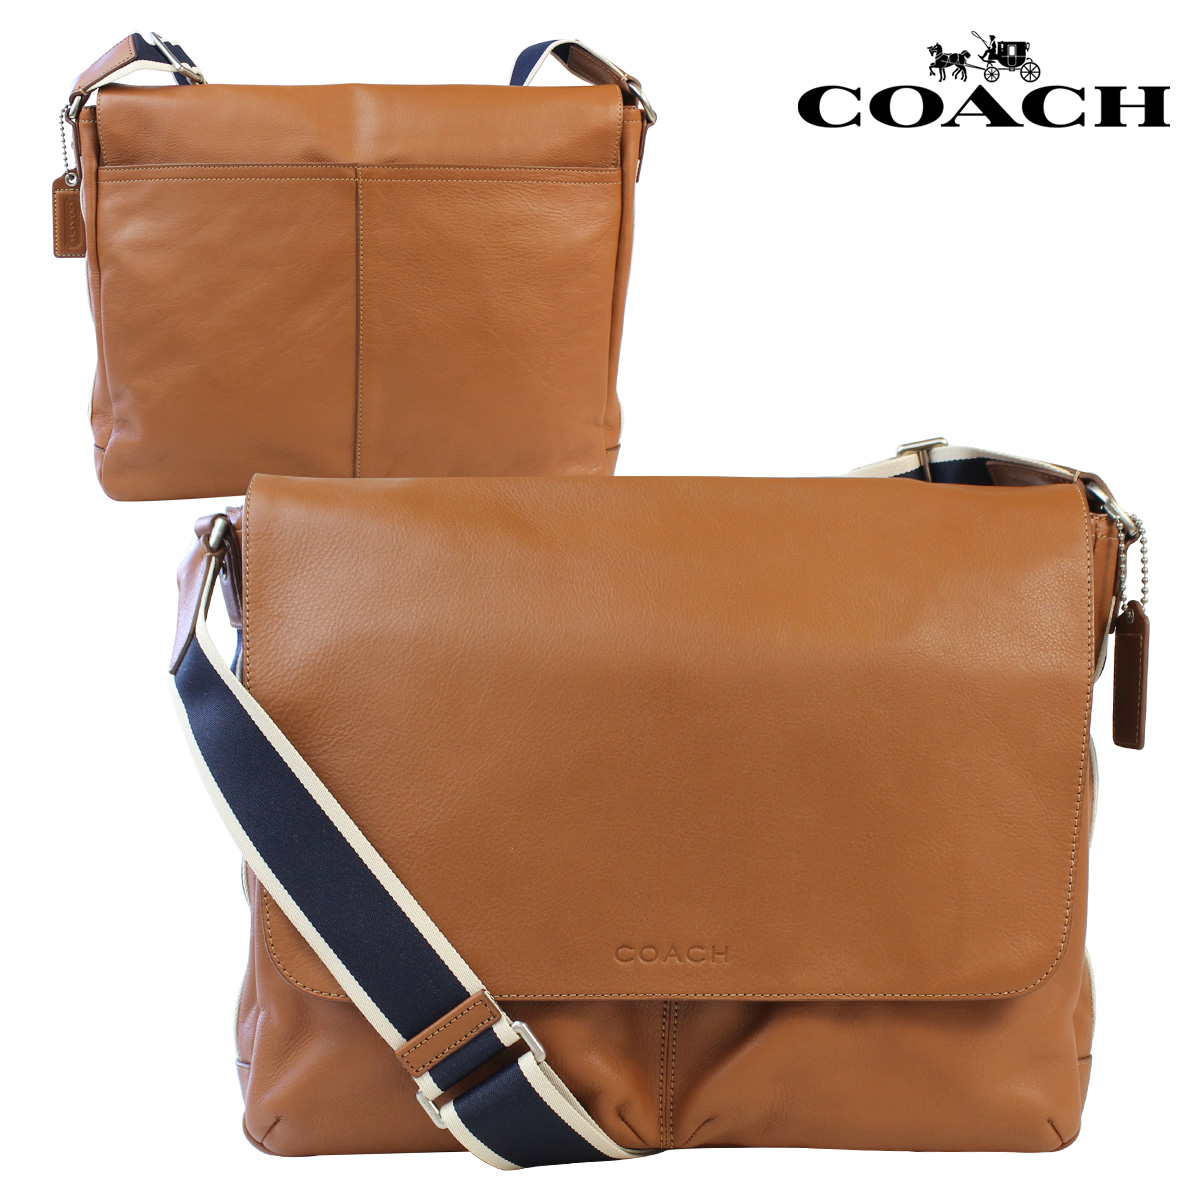 ALLSPORTS: COACH coach men bag messenger bag F70556 saddle | Rakuten Global Market